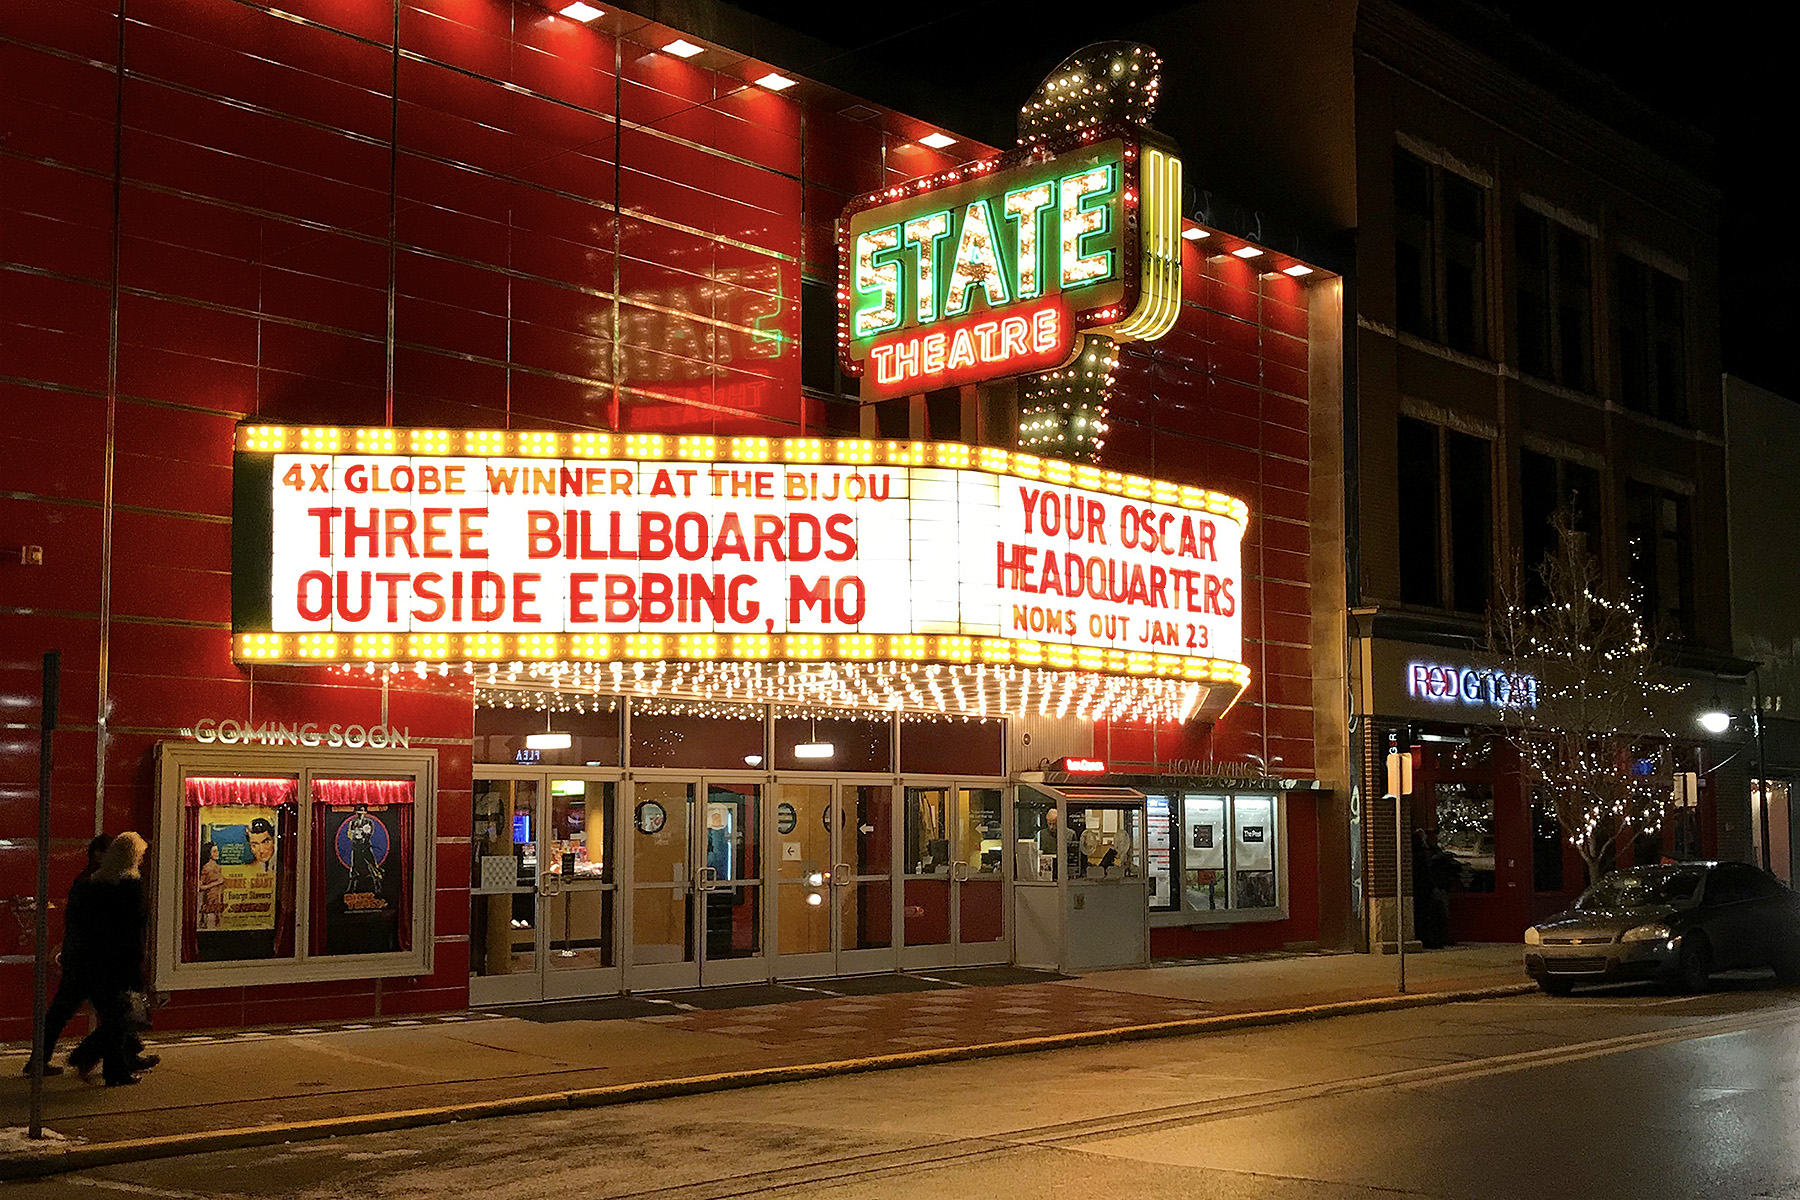 The State Theatre in Traverse City, Michigan